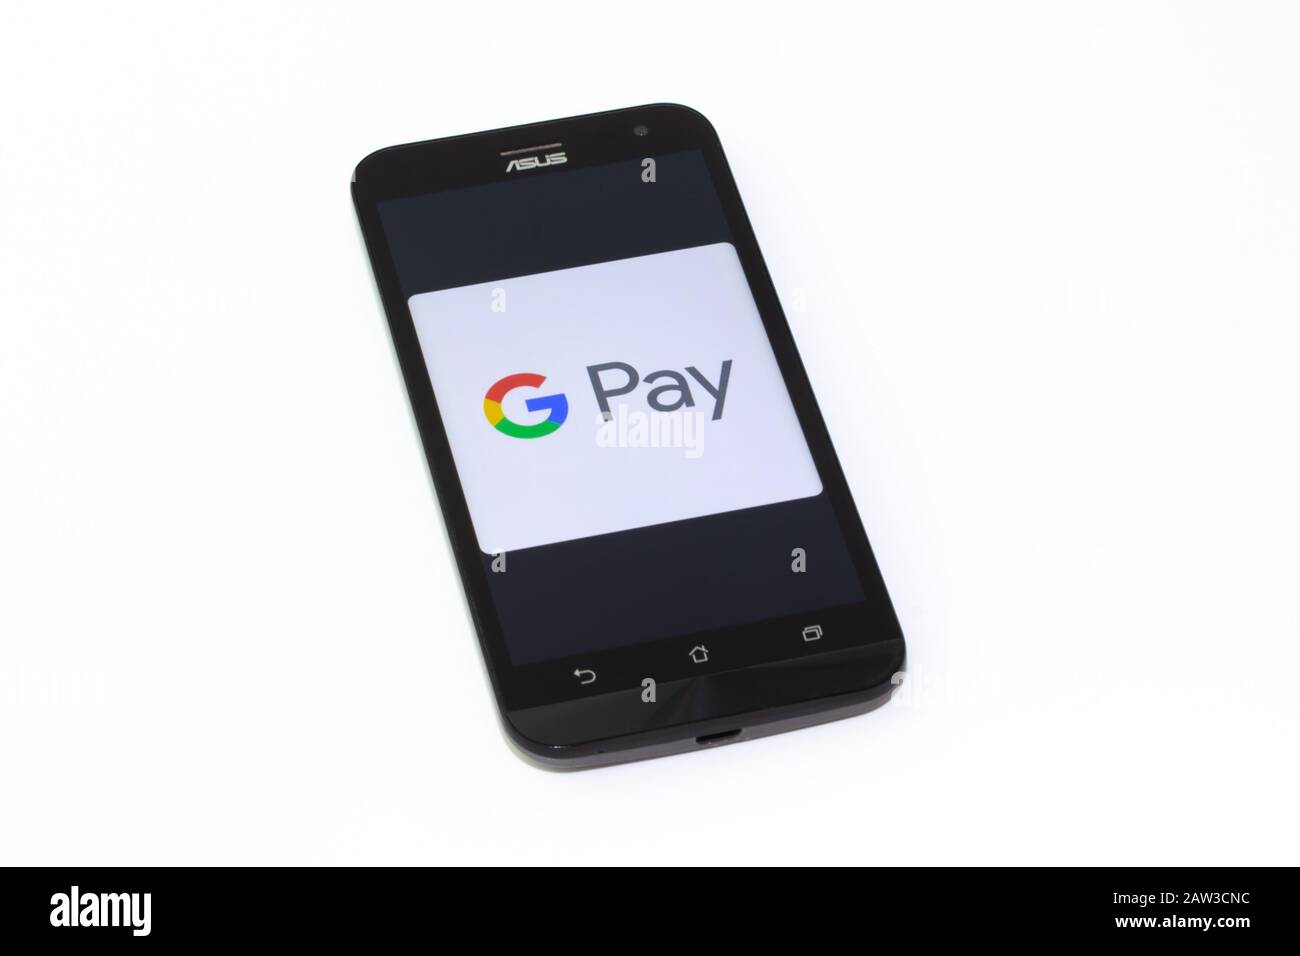 Kouvola, Finland - 23 January 2020: Google Pay app logo on the screen of smartphone Asus Stock Photo